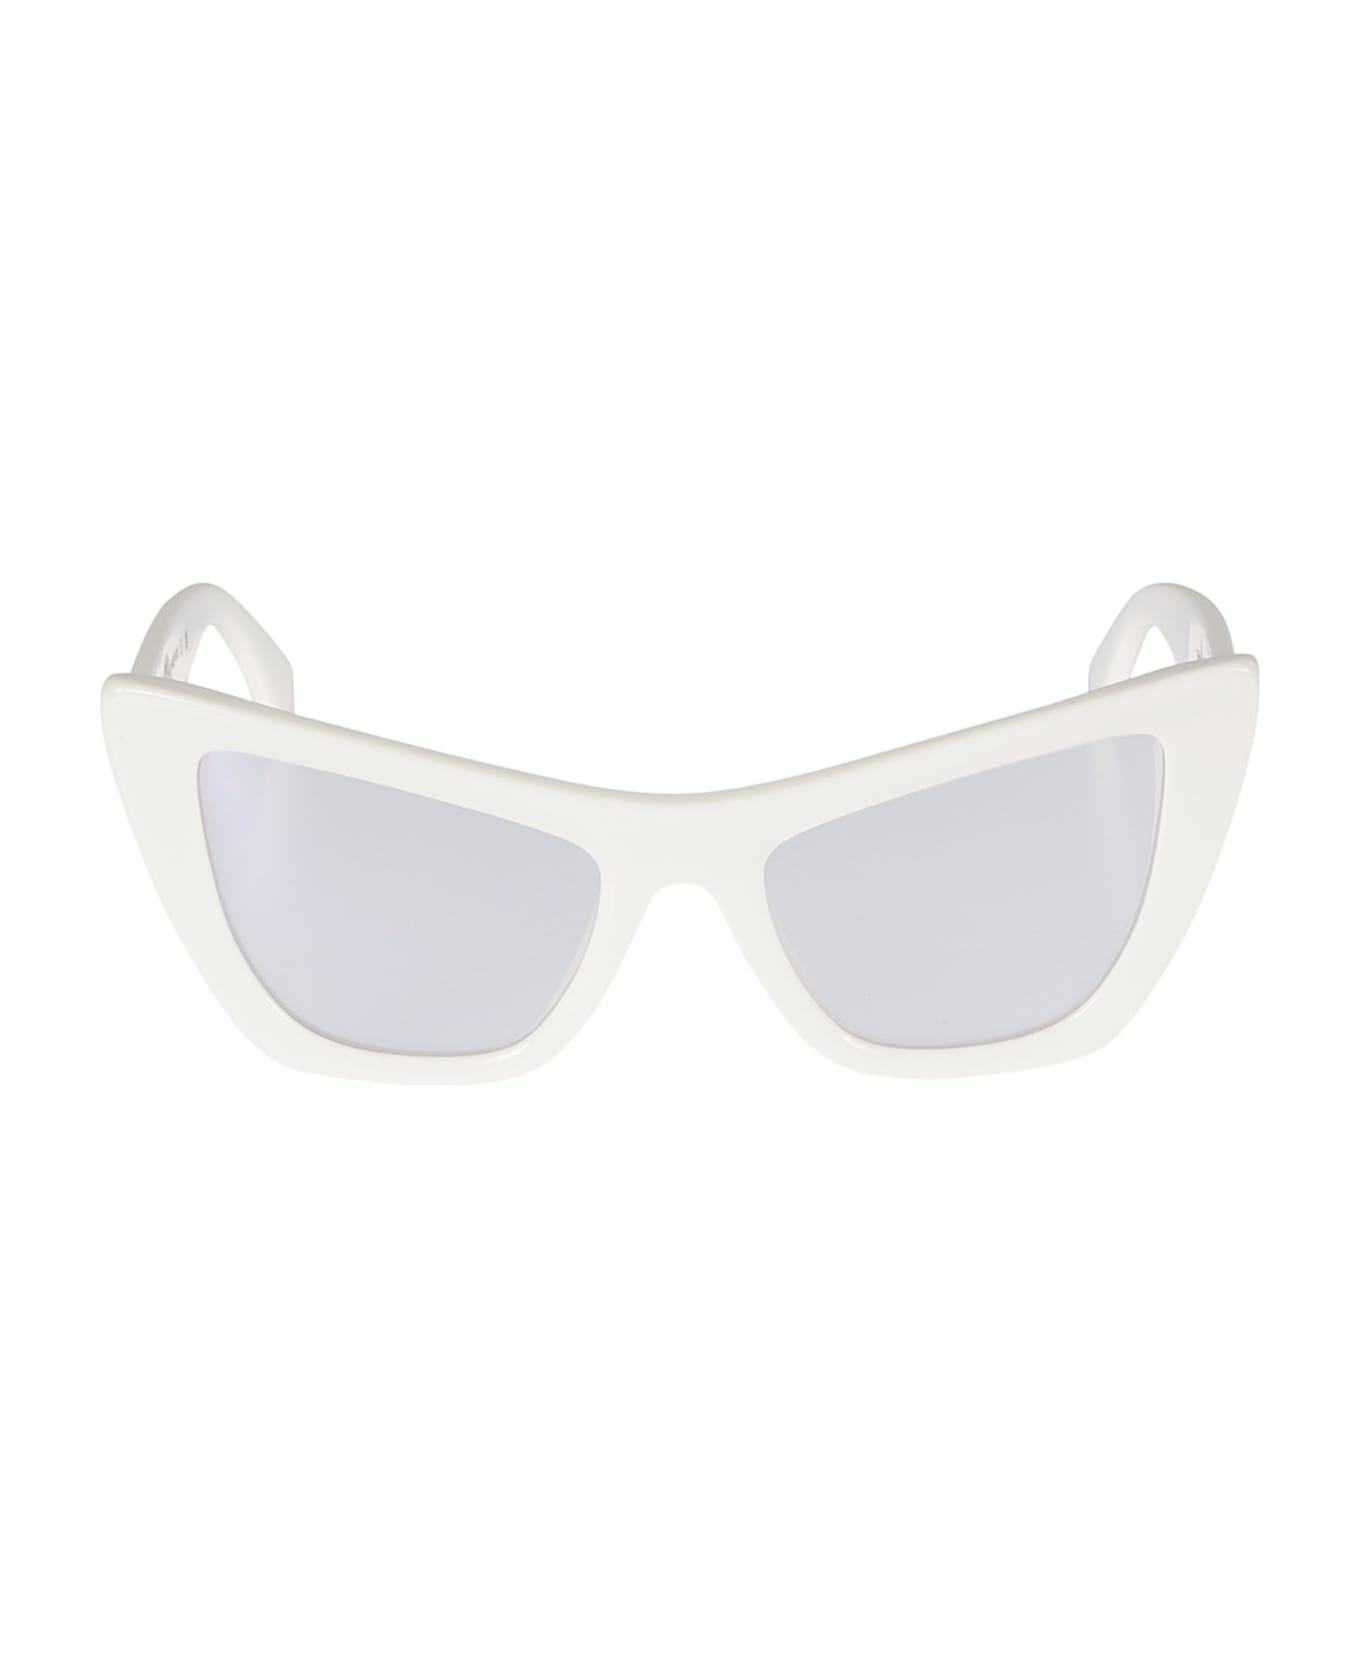 Off-White Optical Style 11 Glasses - White